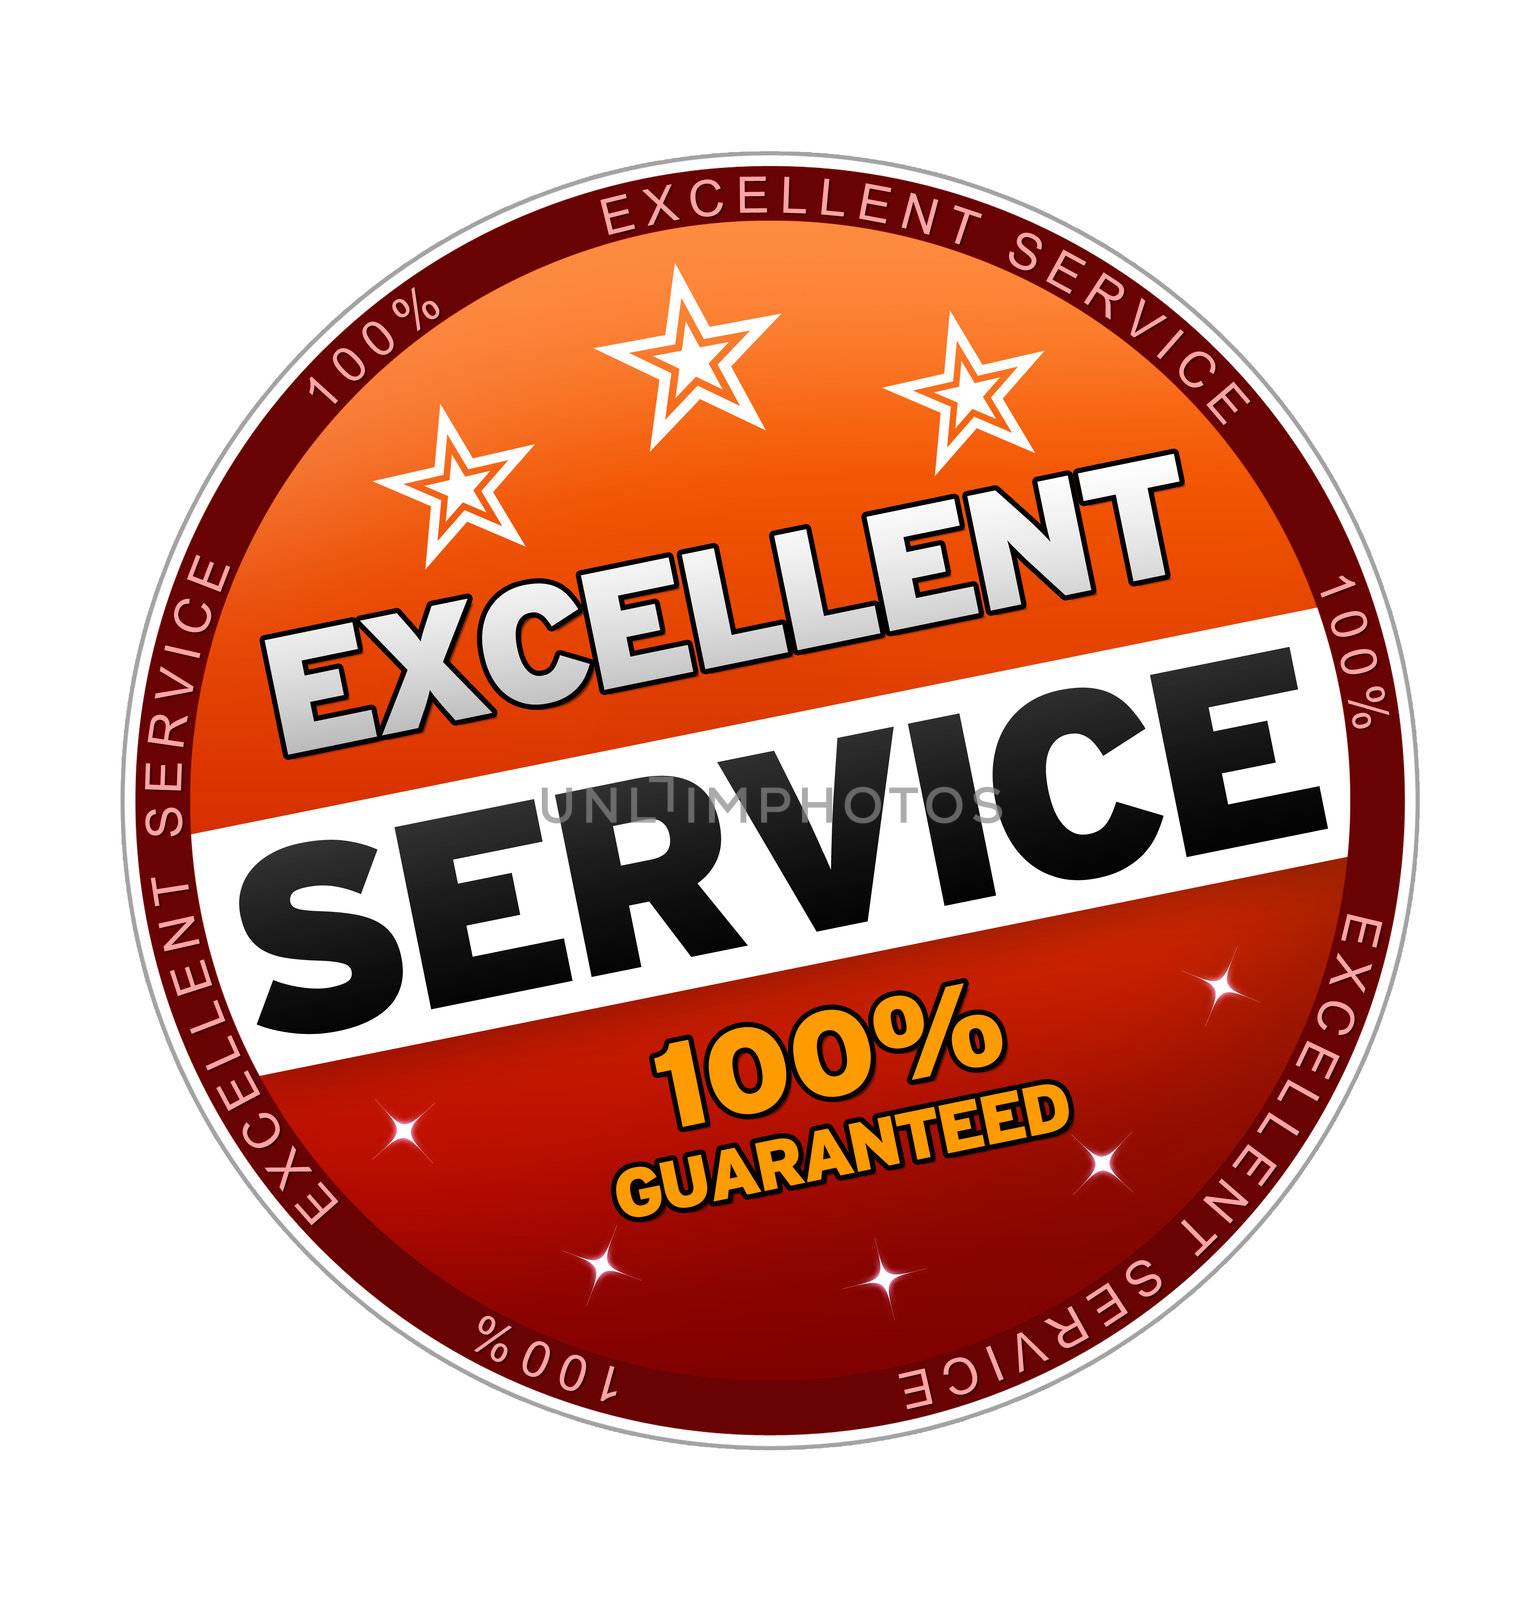 100% Excellent Service by kbuntu